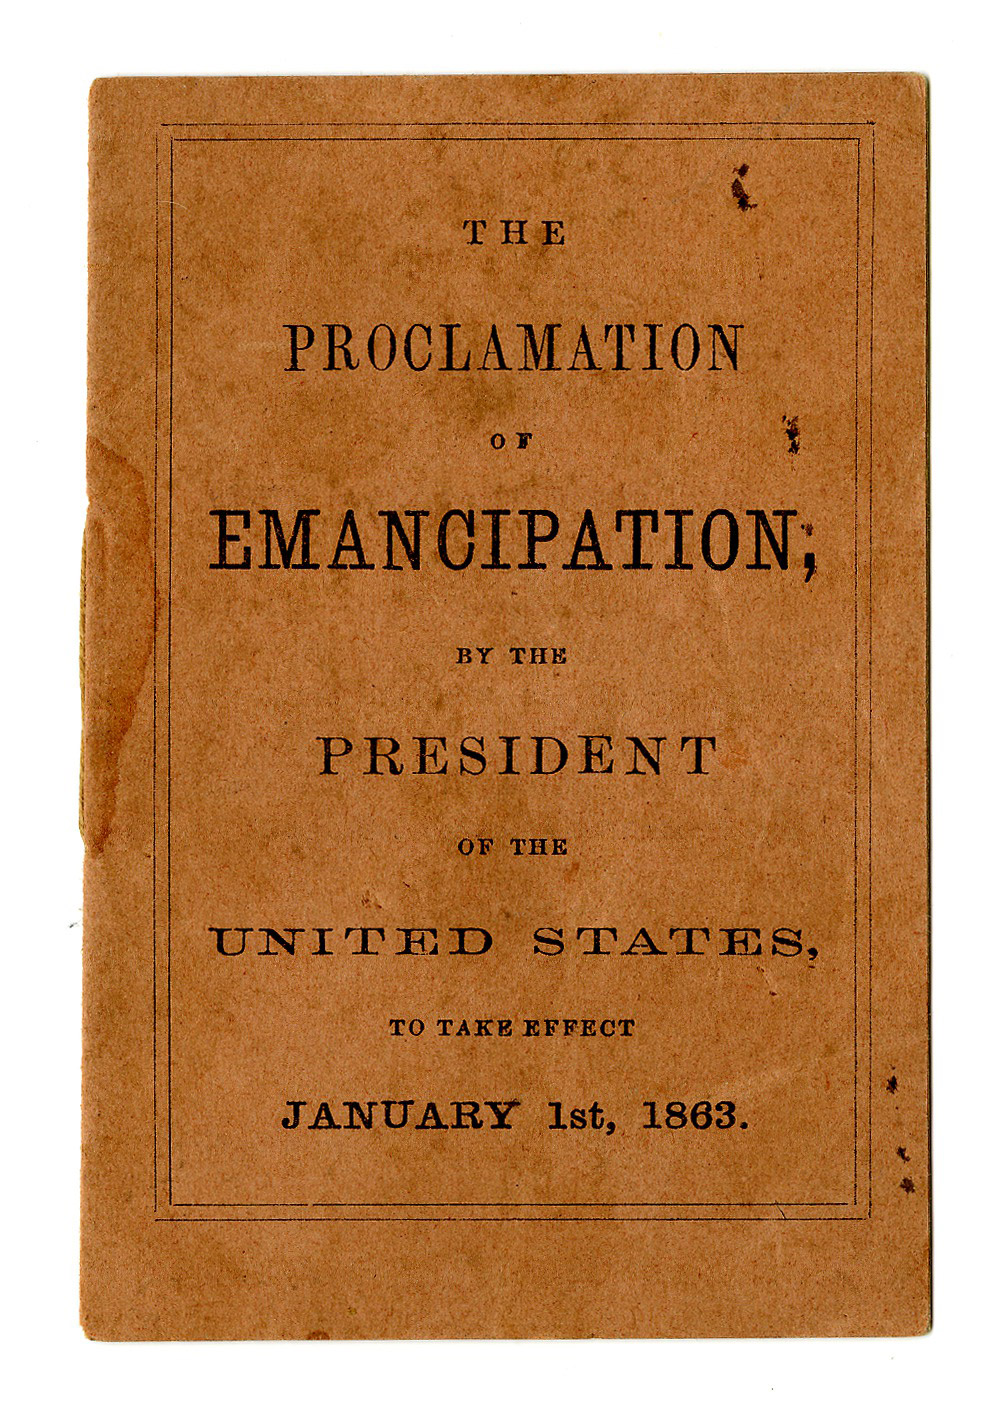 The Proclamation of Emancipation